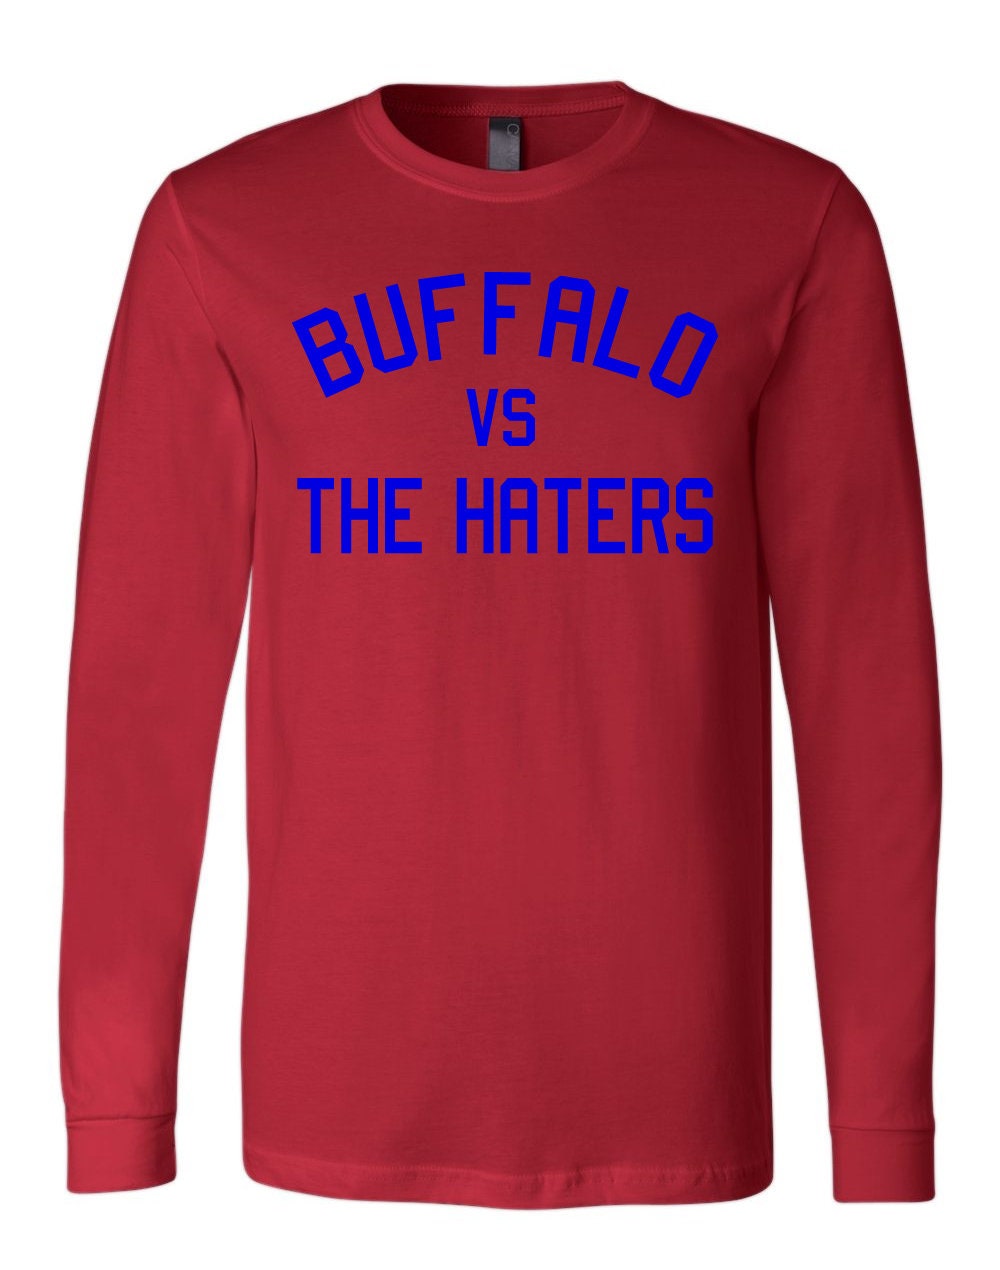 Buffalo VS The Haters T-Shirt